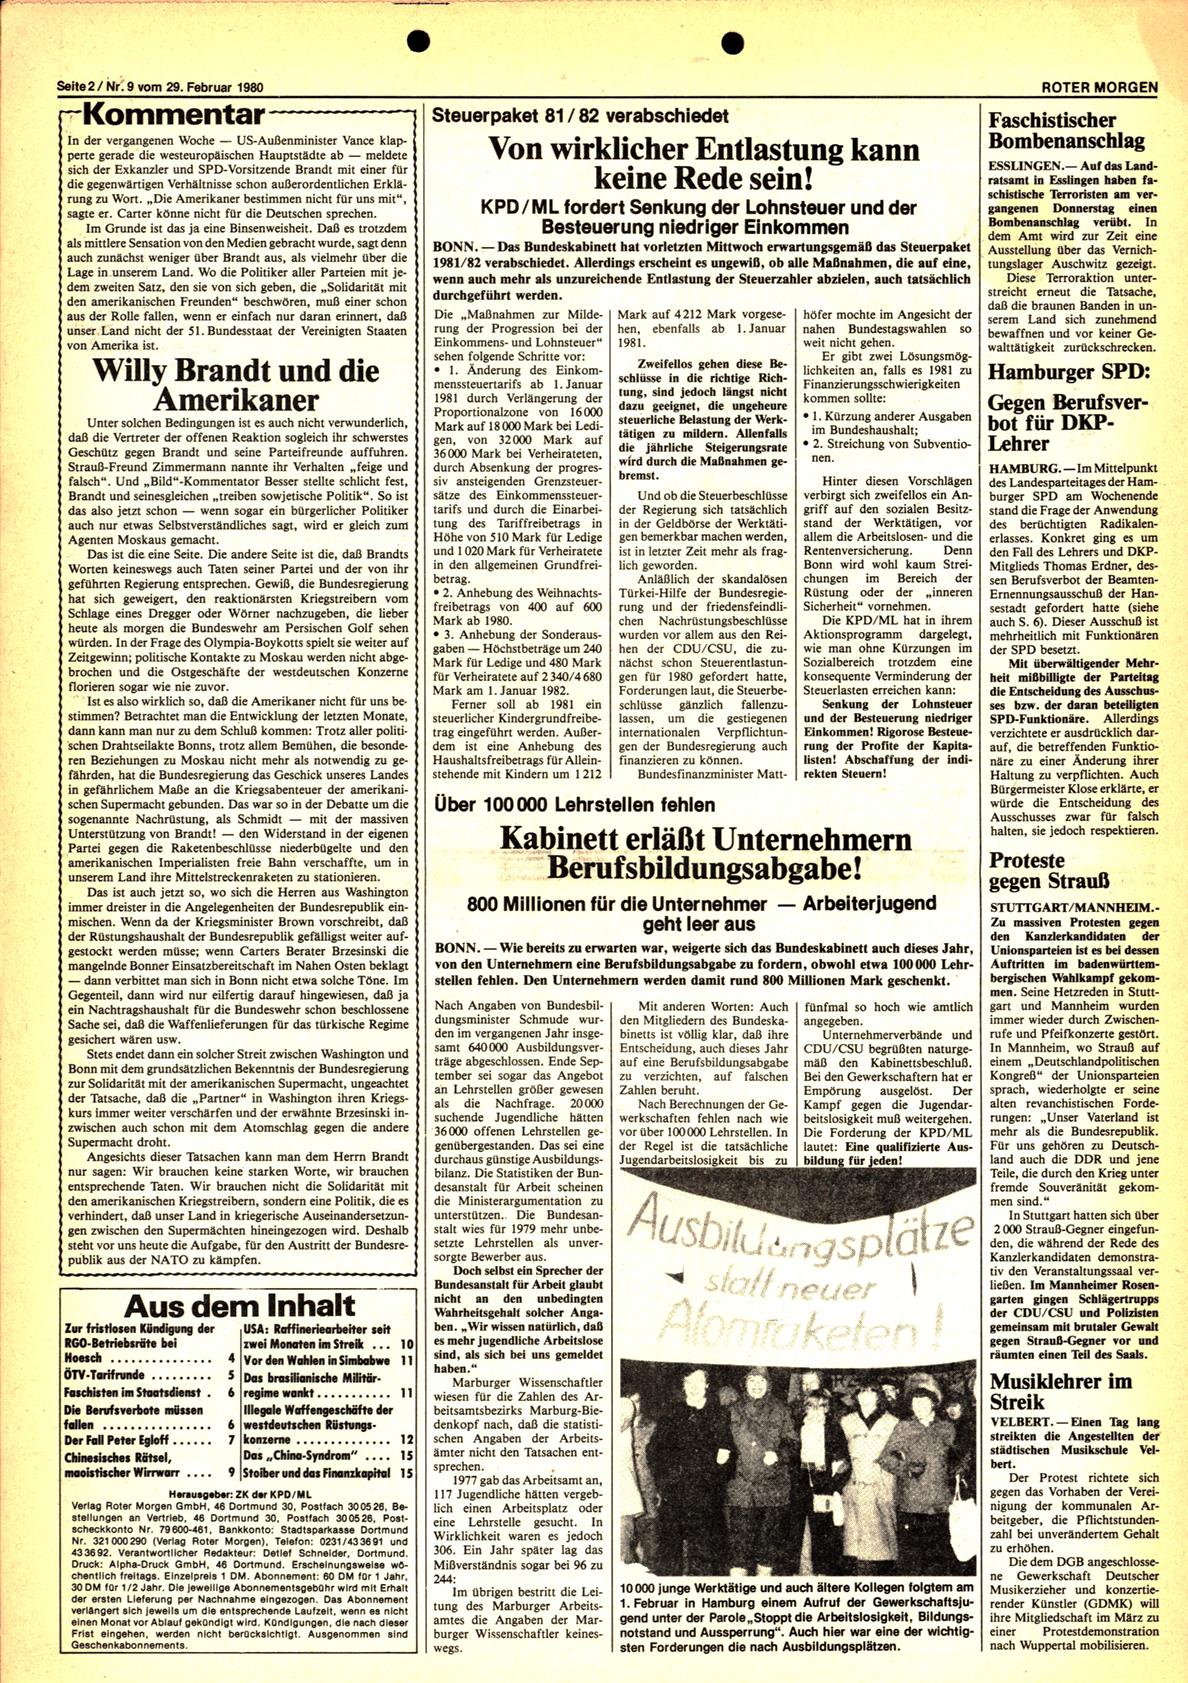 Roter Morgen, 14. Jg., 29. Februar 1980, Nr. 9, Seite 2